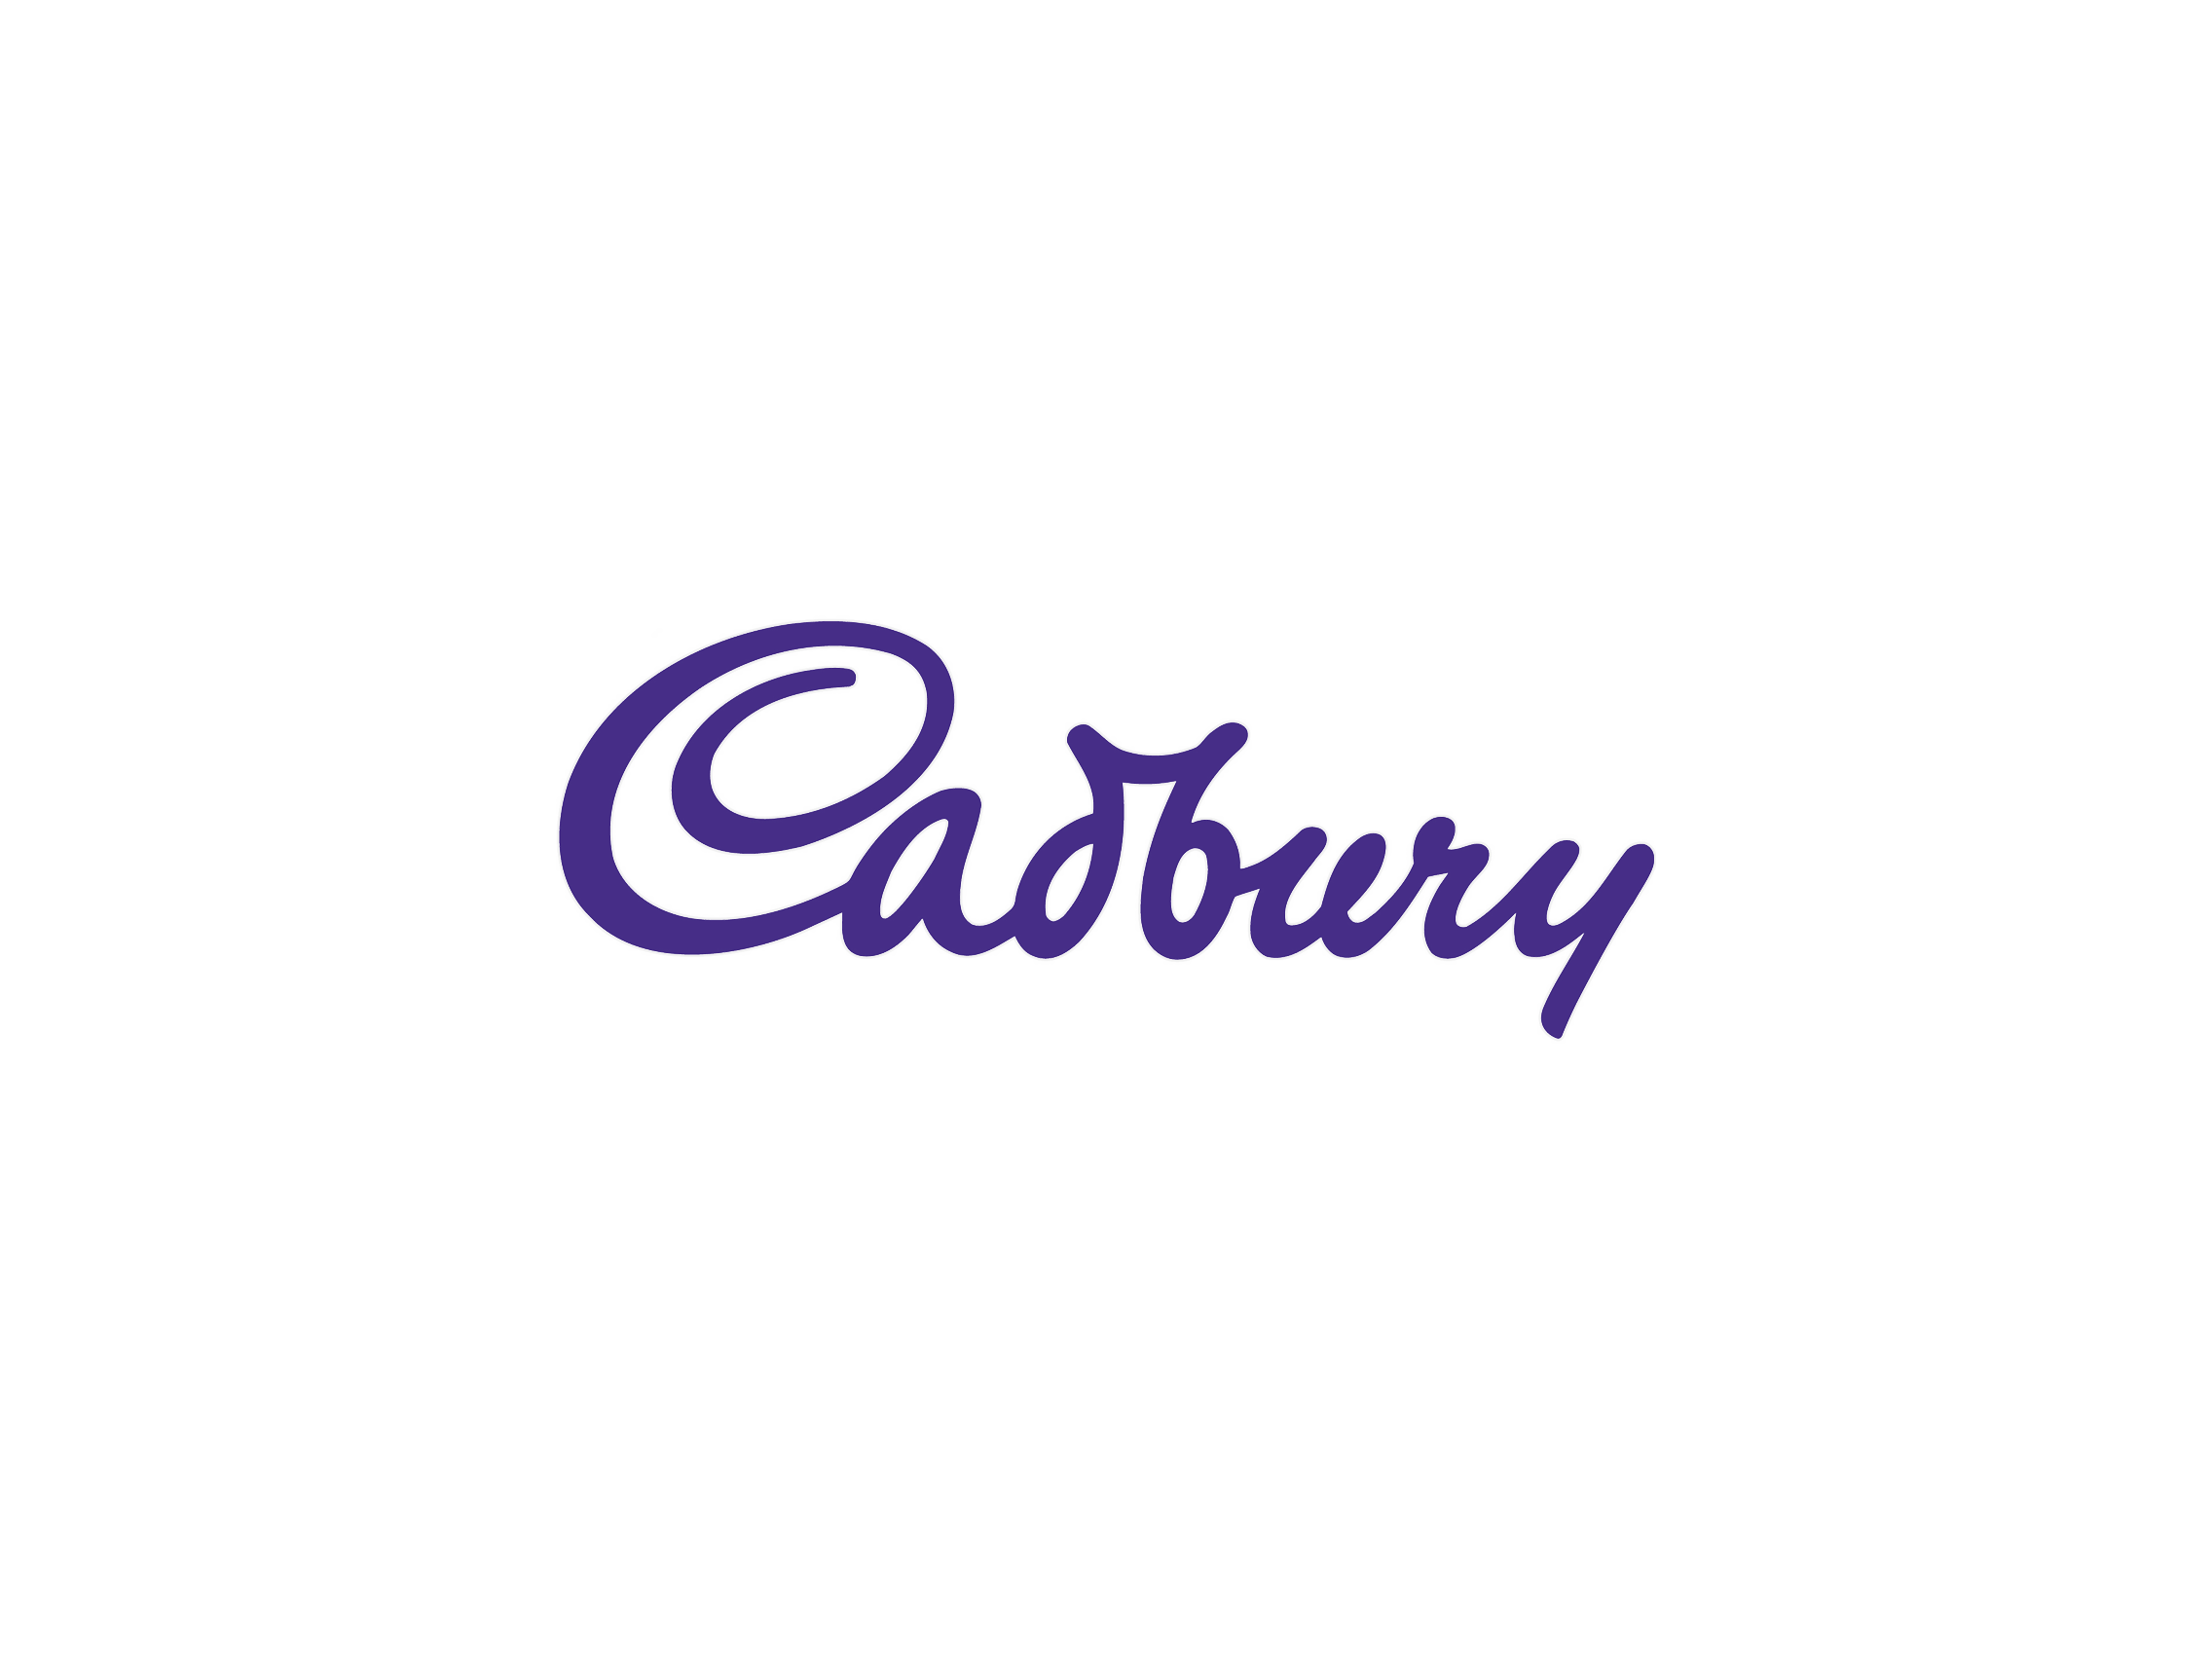 Cadbury-logo.png